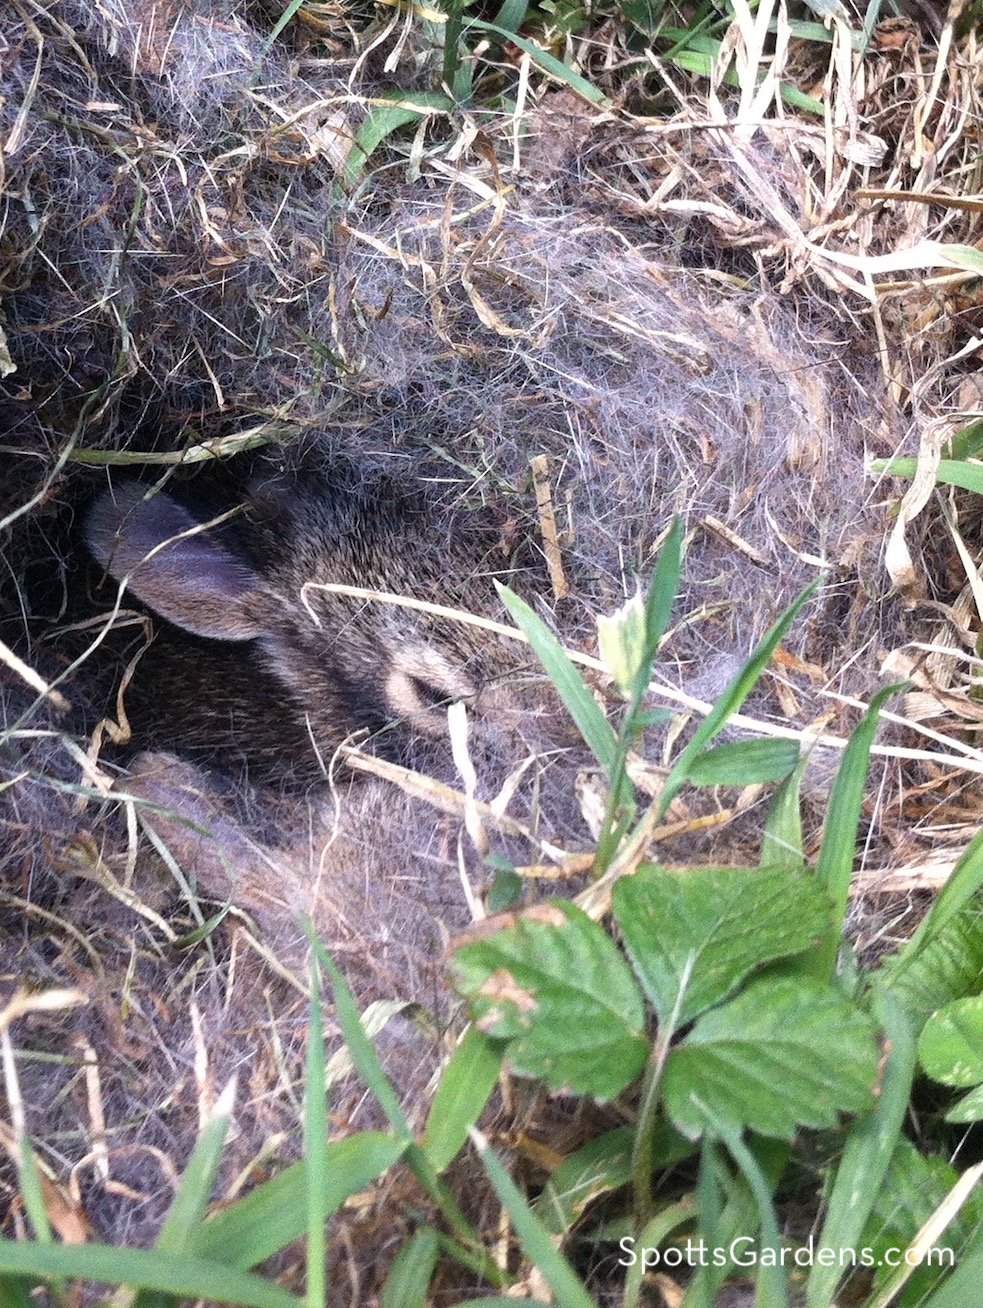 Rabbit in nest